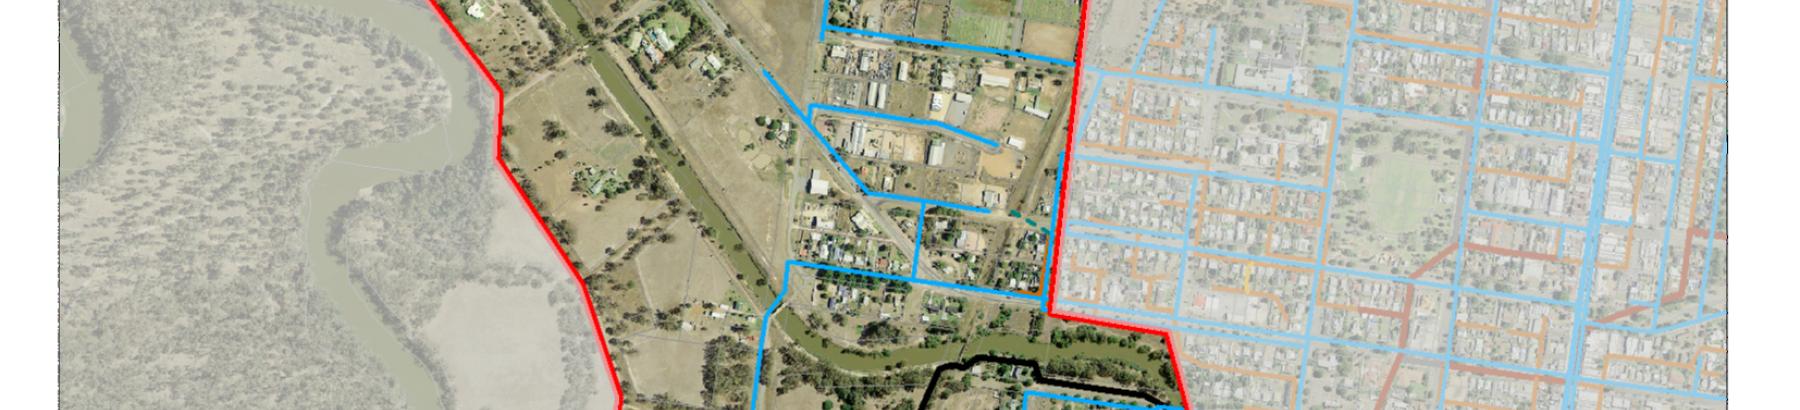 South West Narrandera Sewer Scoping Study